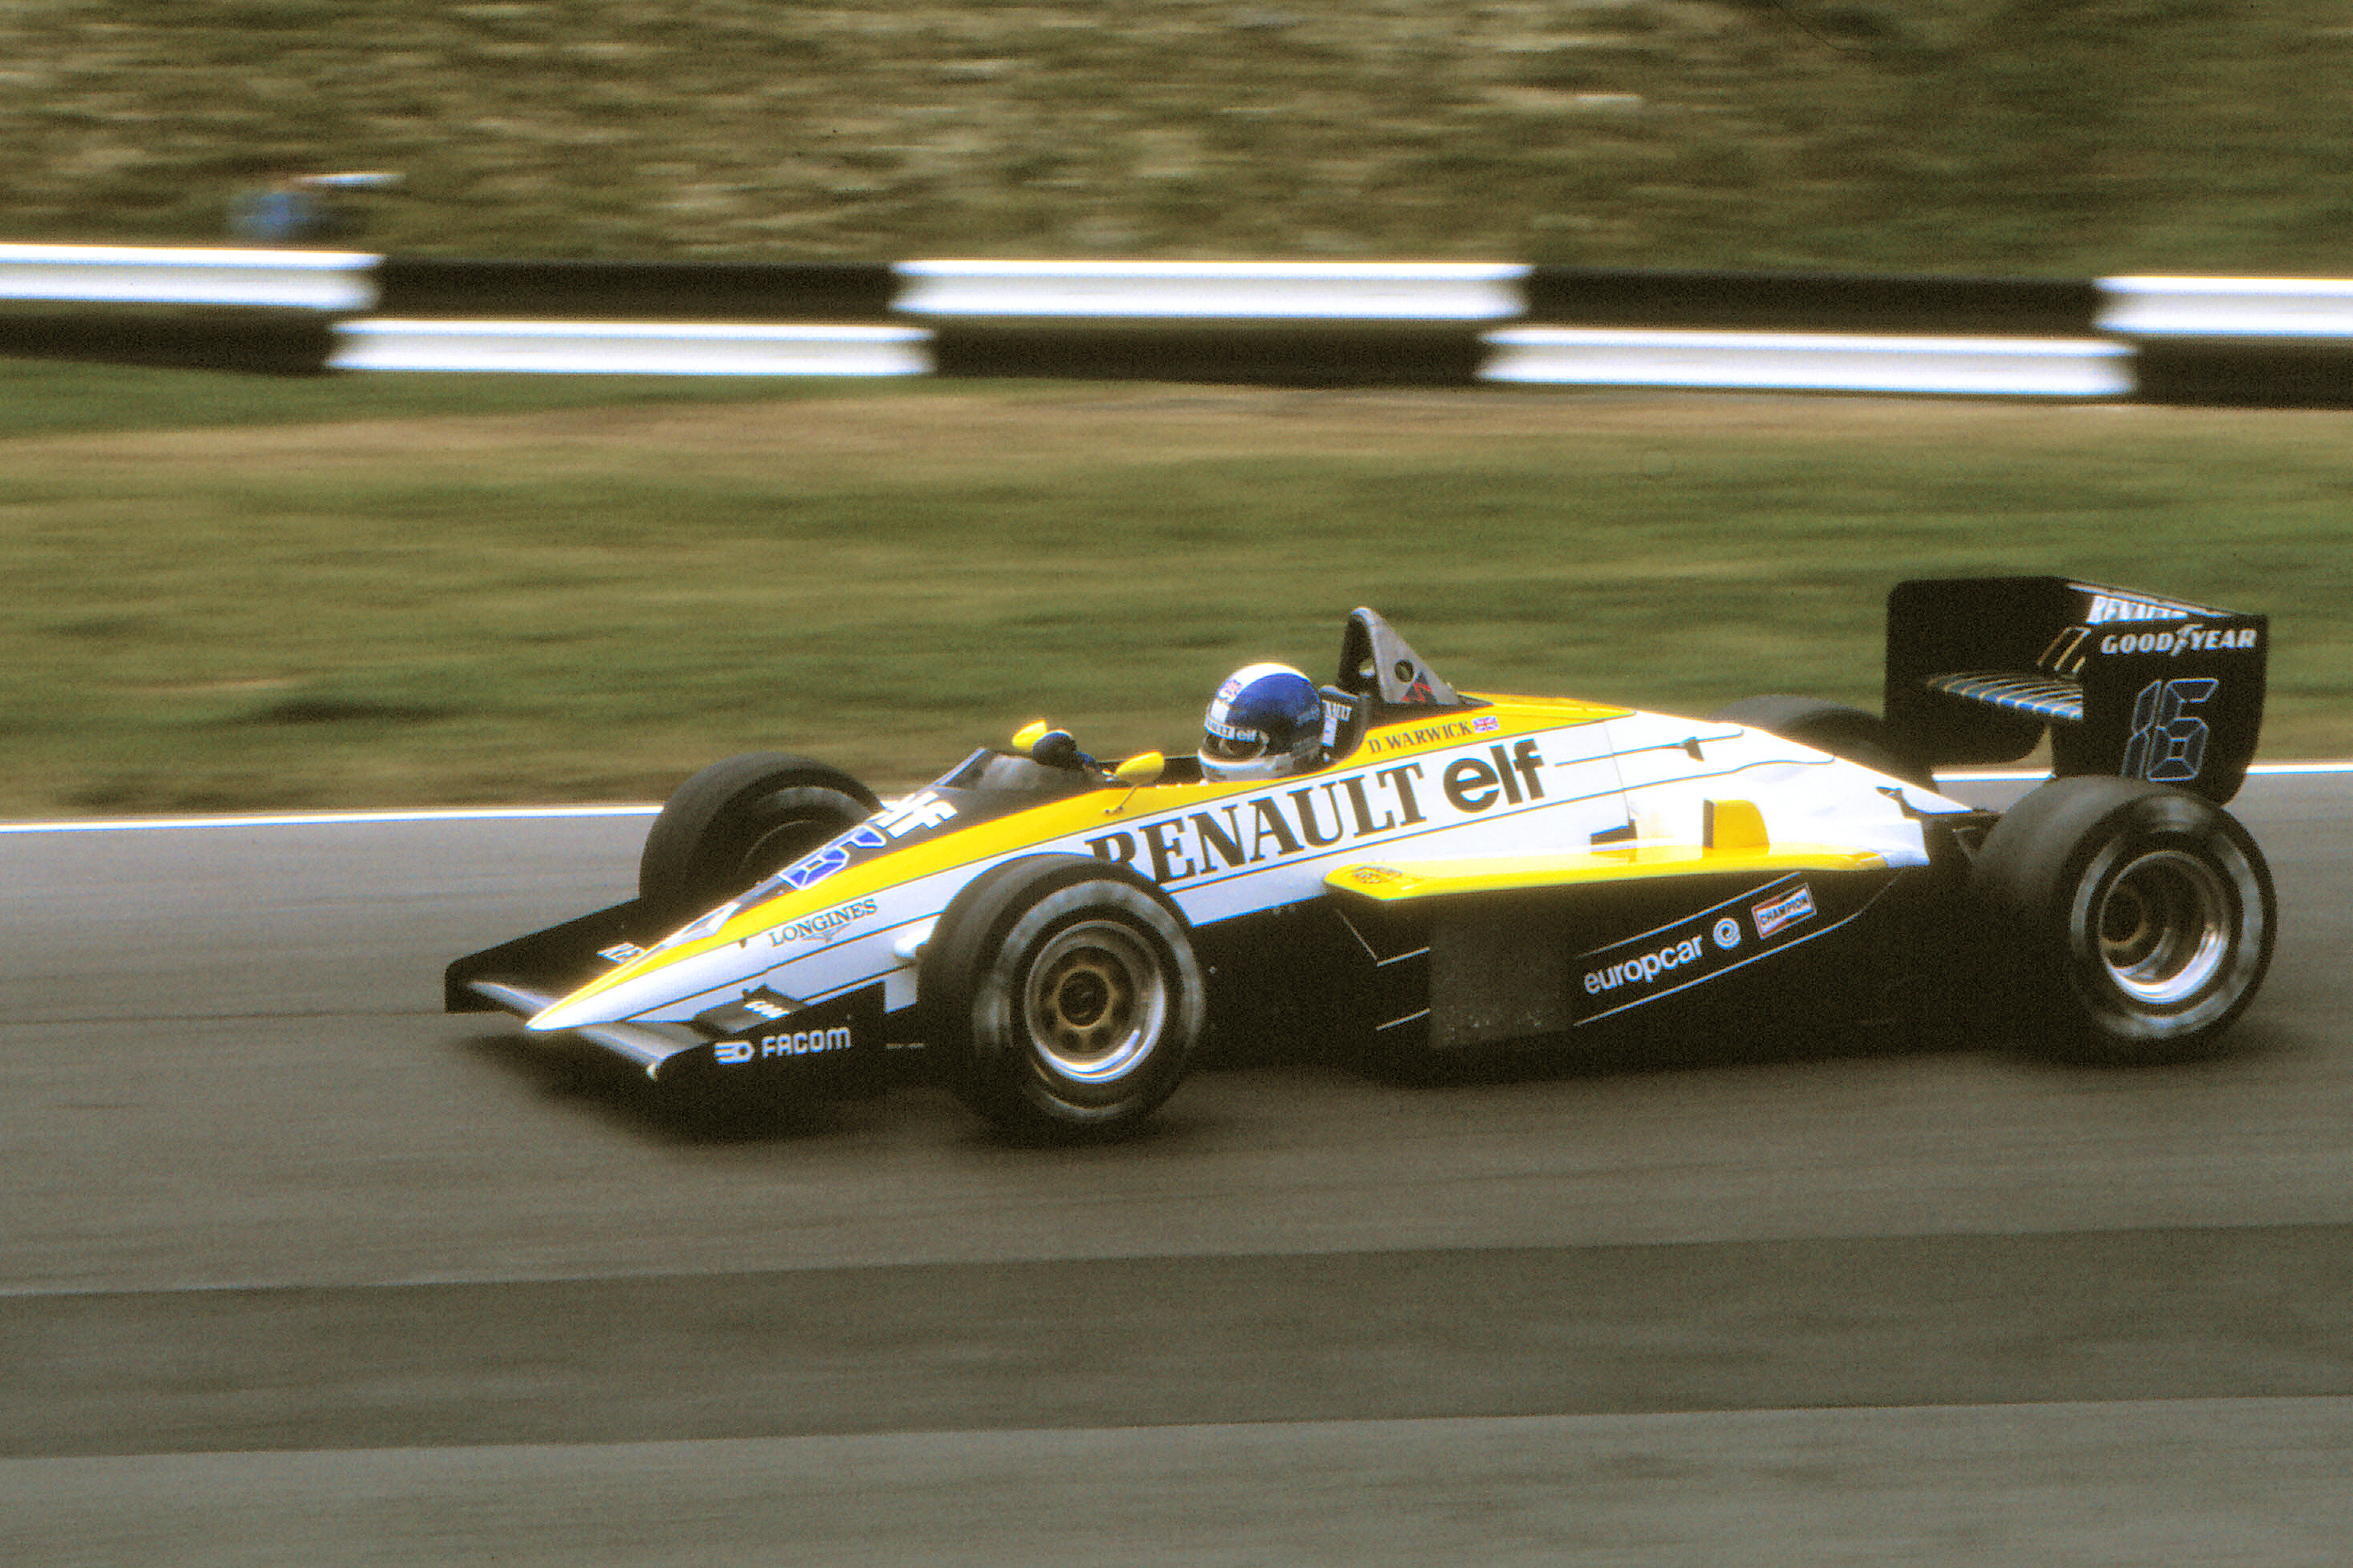 File:1985 European GP Derek Warwick.jpg - Wikimedia Commons